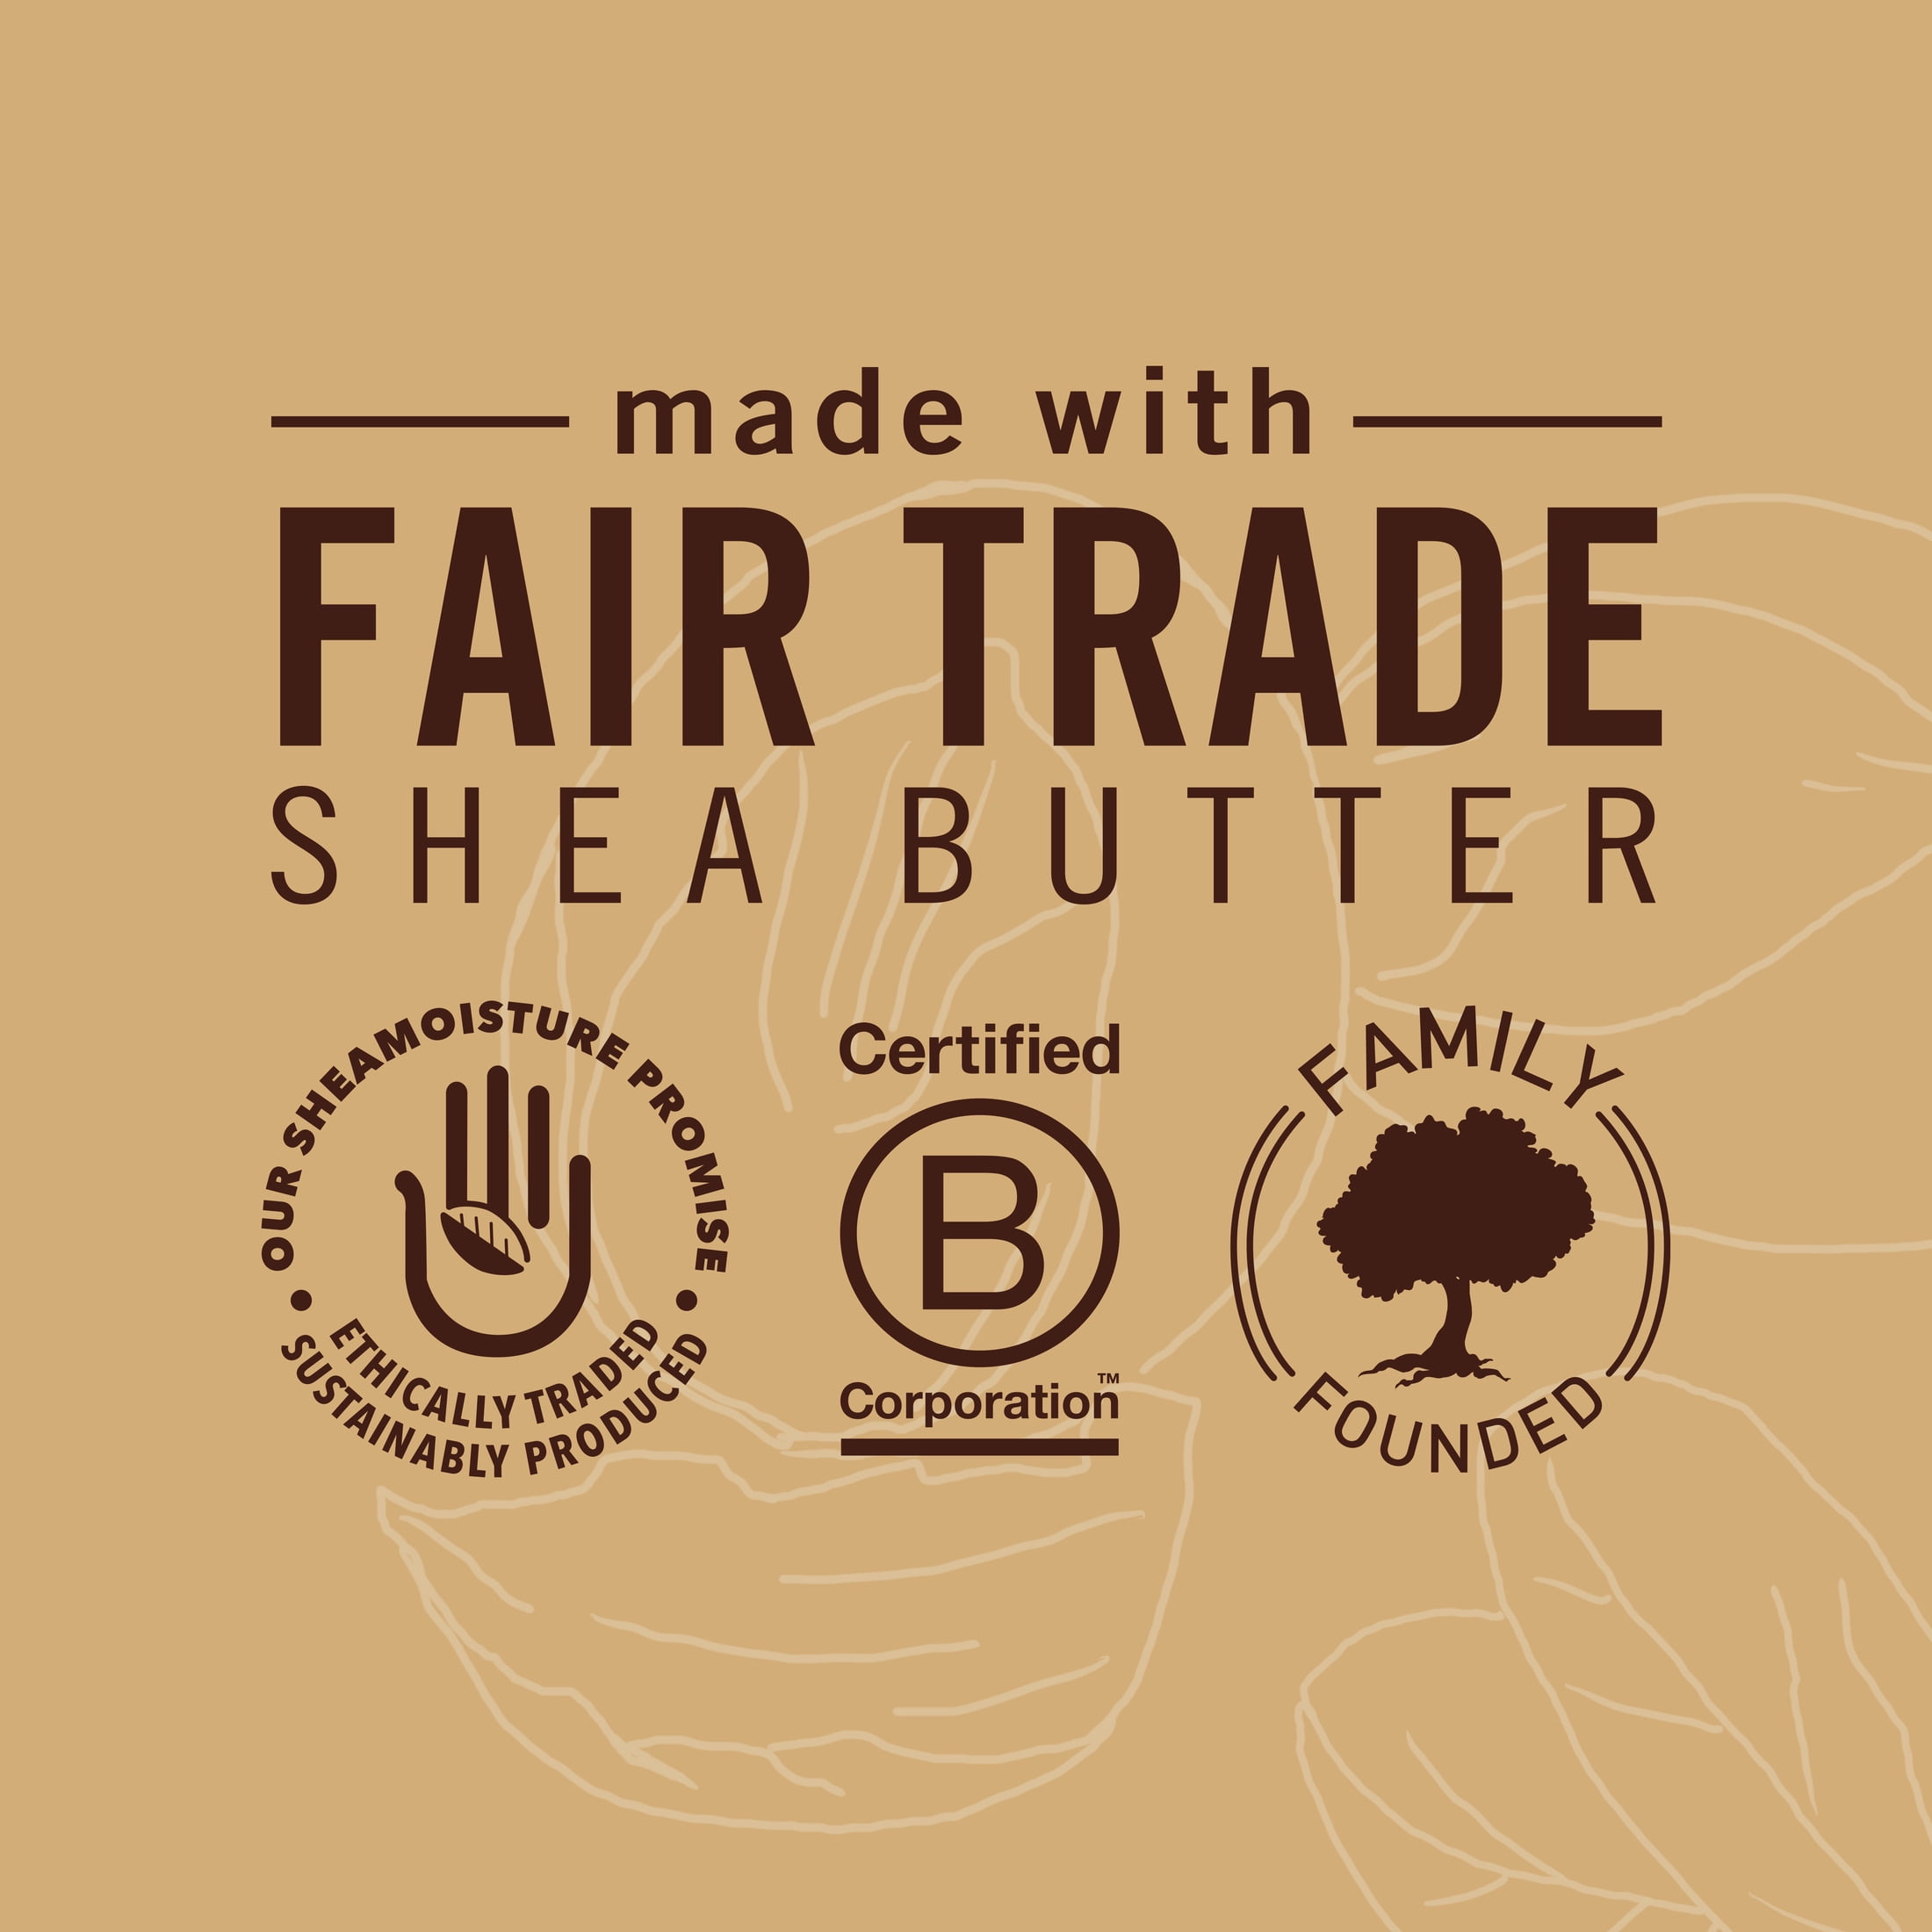 Soap Making Shea Butter Soap by Make Market®